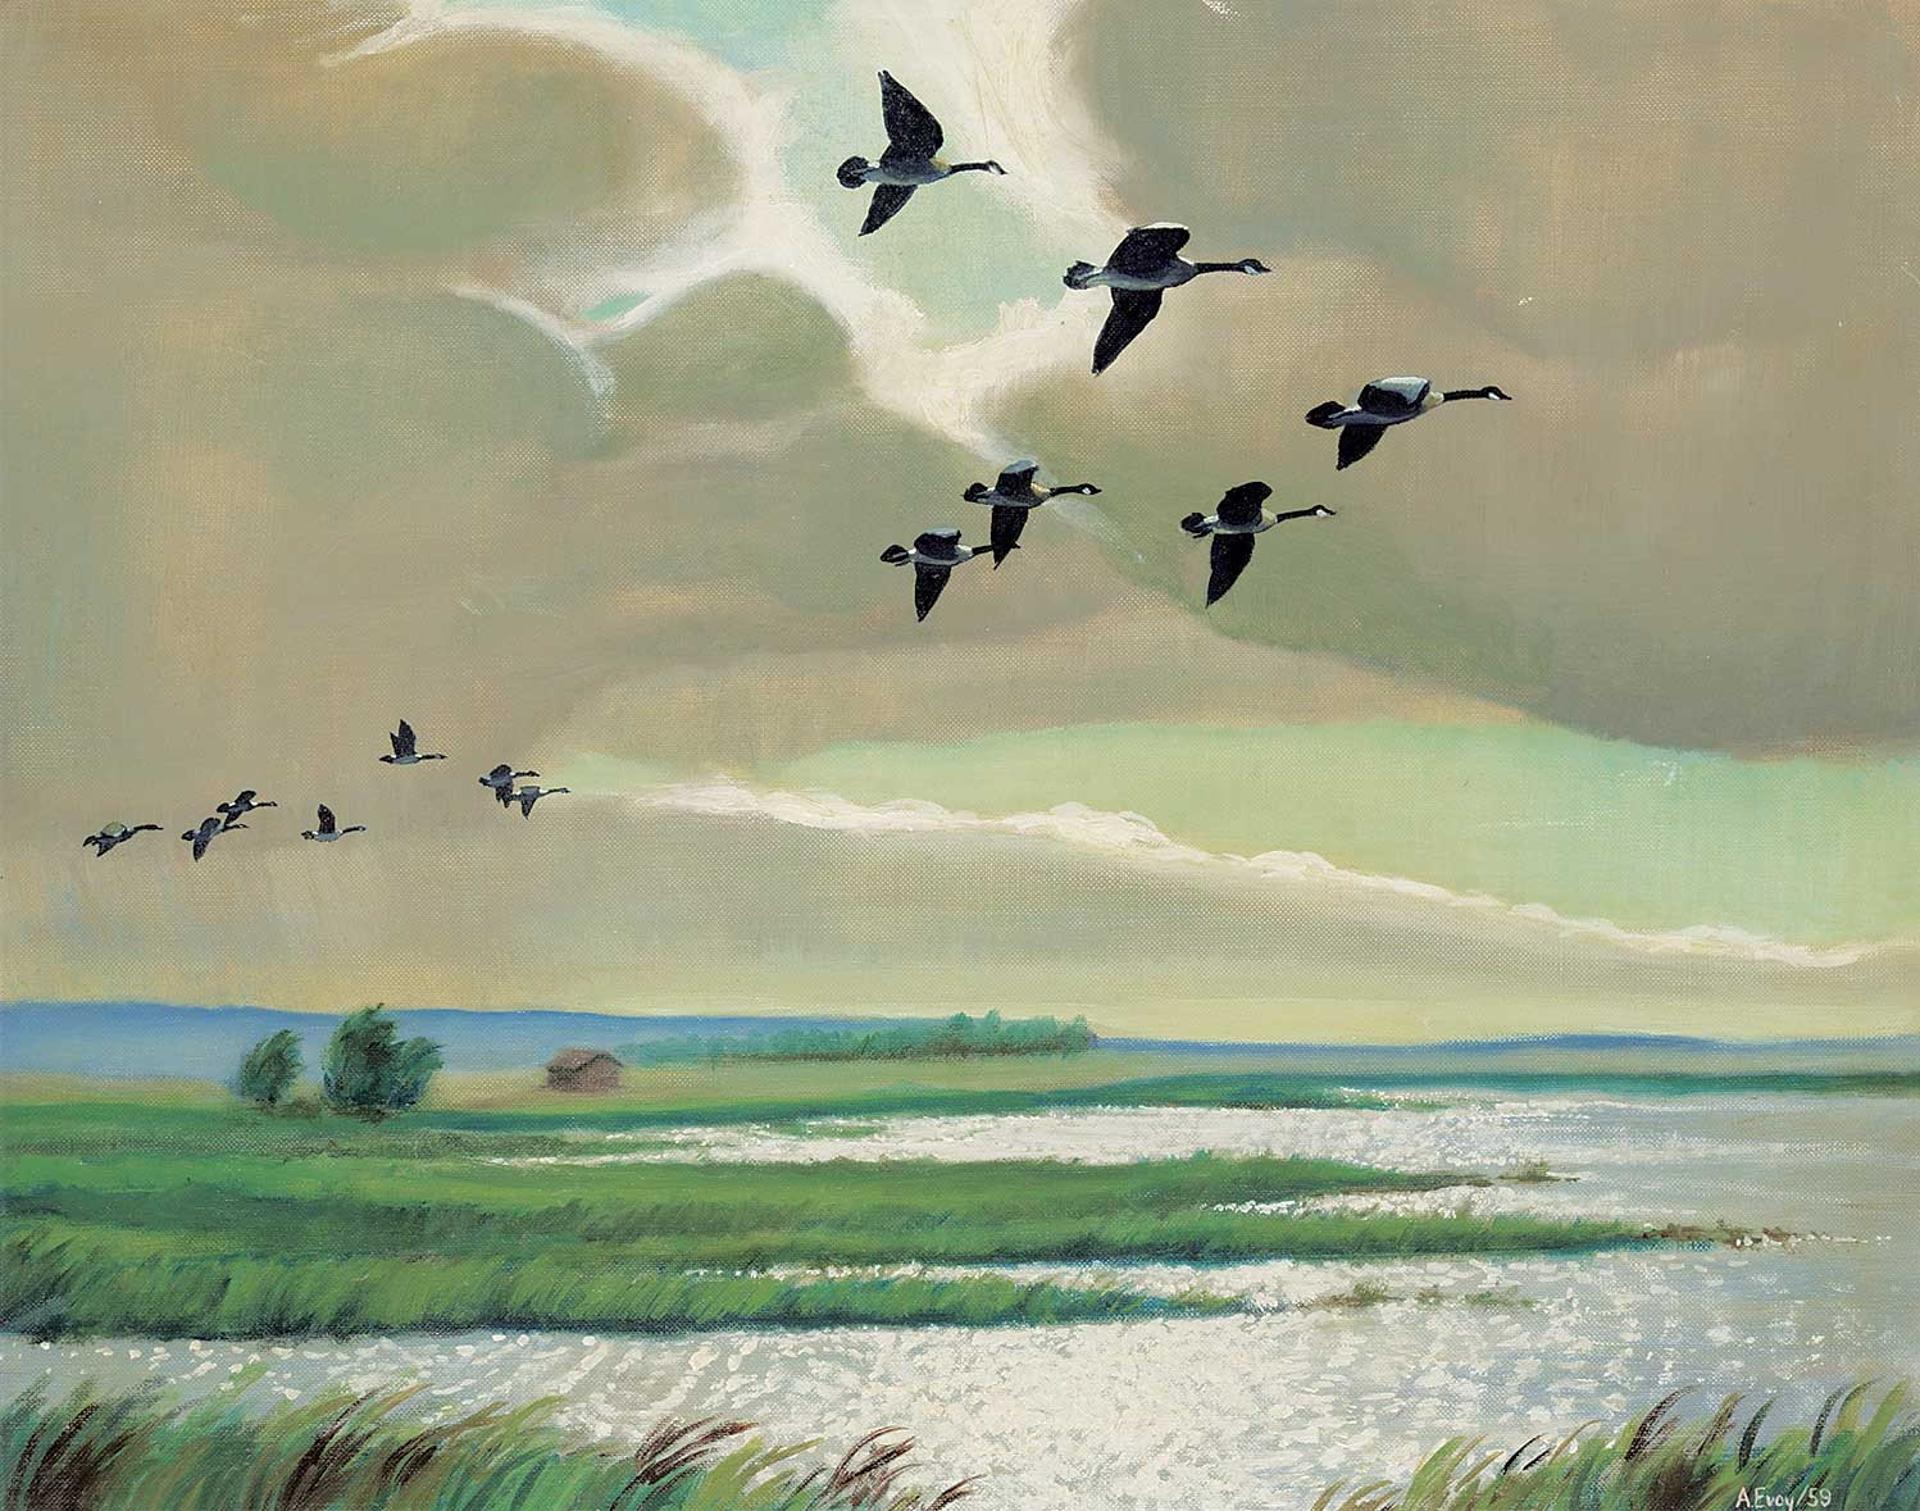 George Arthur [Art] Evoy - Untitled - Geese Taking Flight